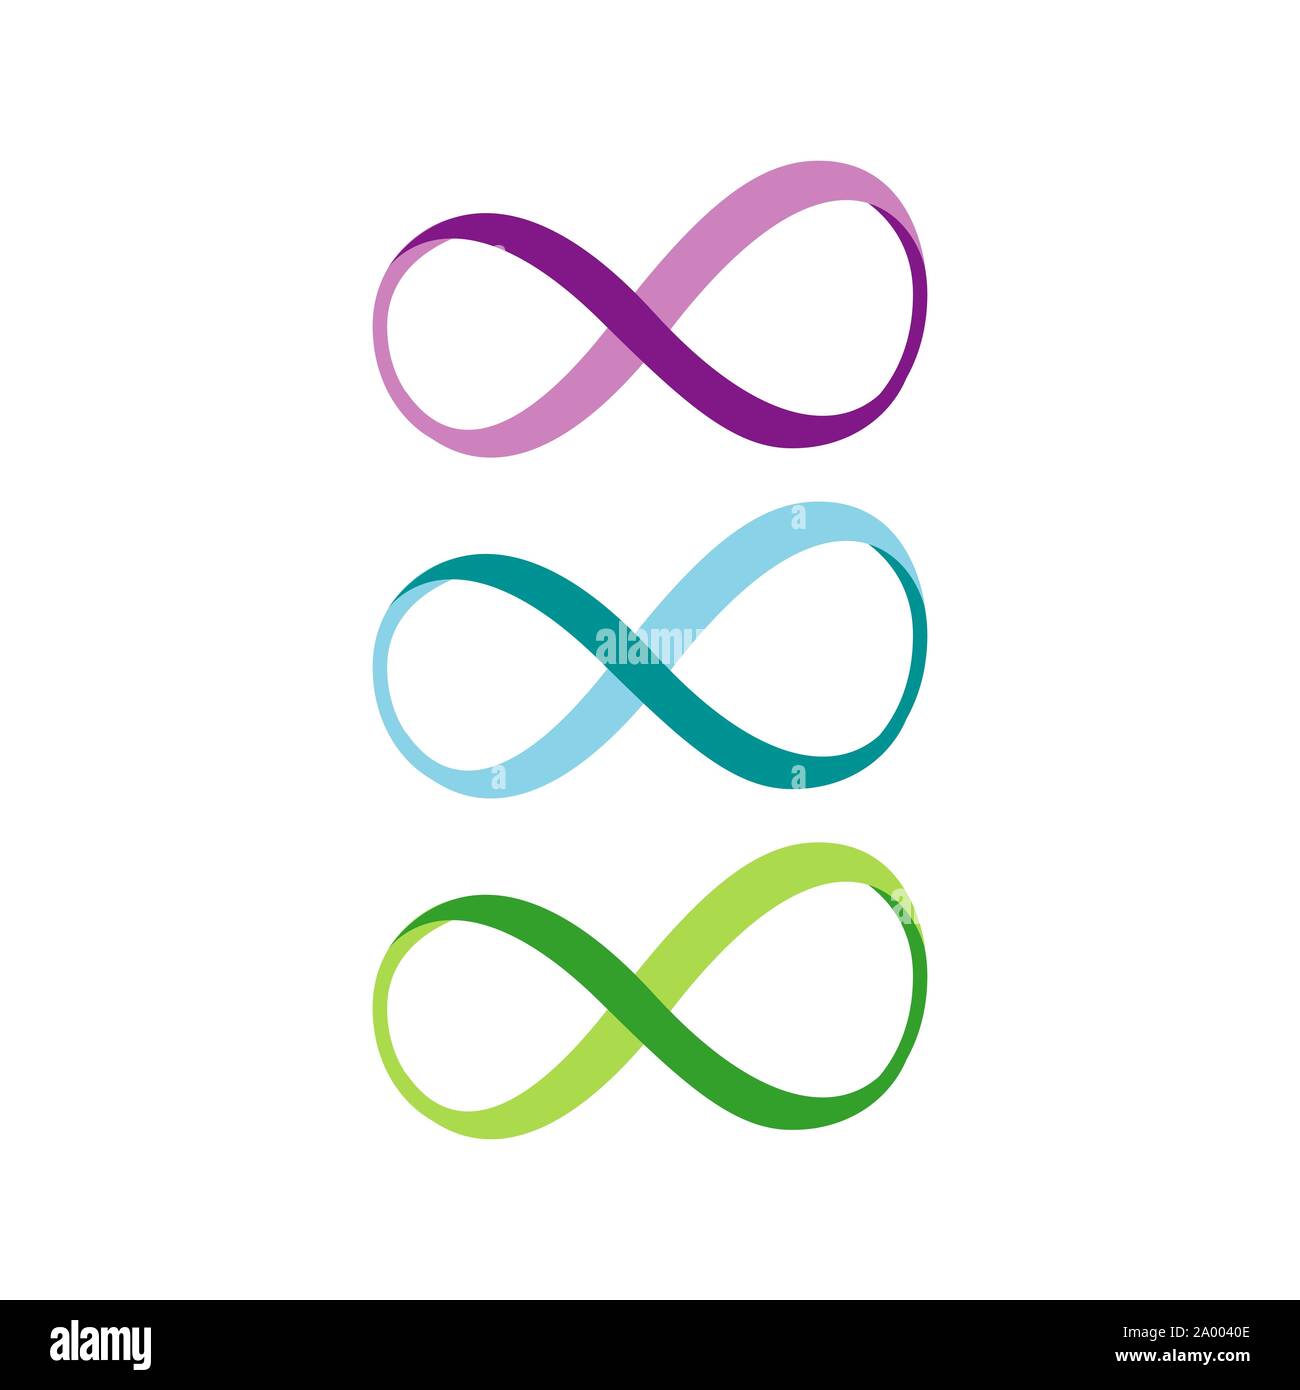 creative concept of infinity logo design vector illustrations Stock Vector